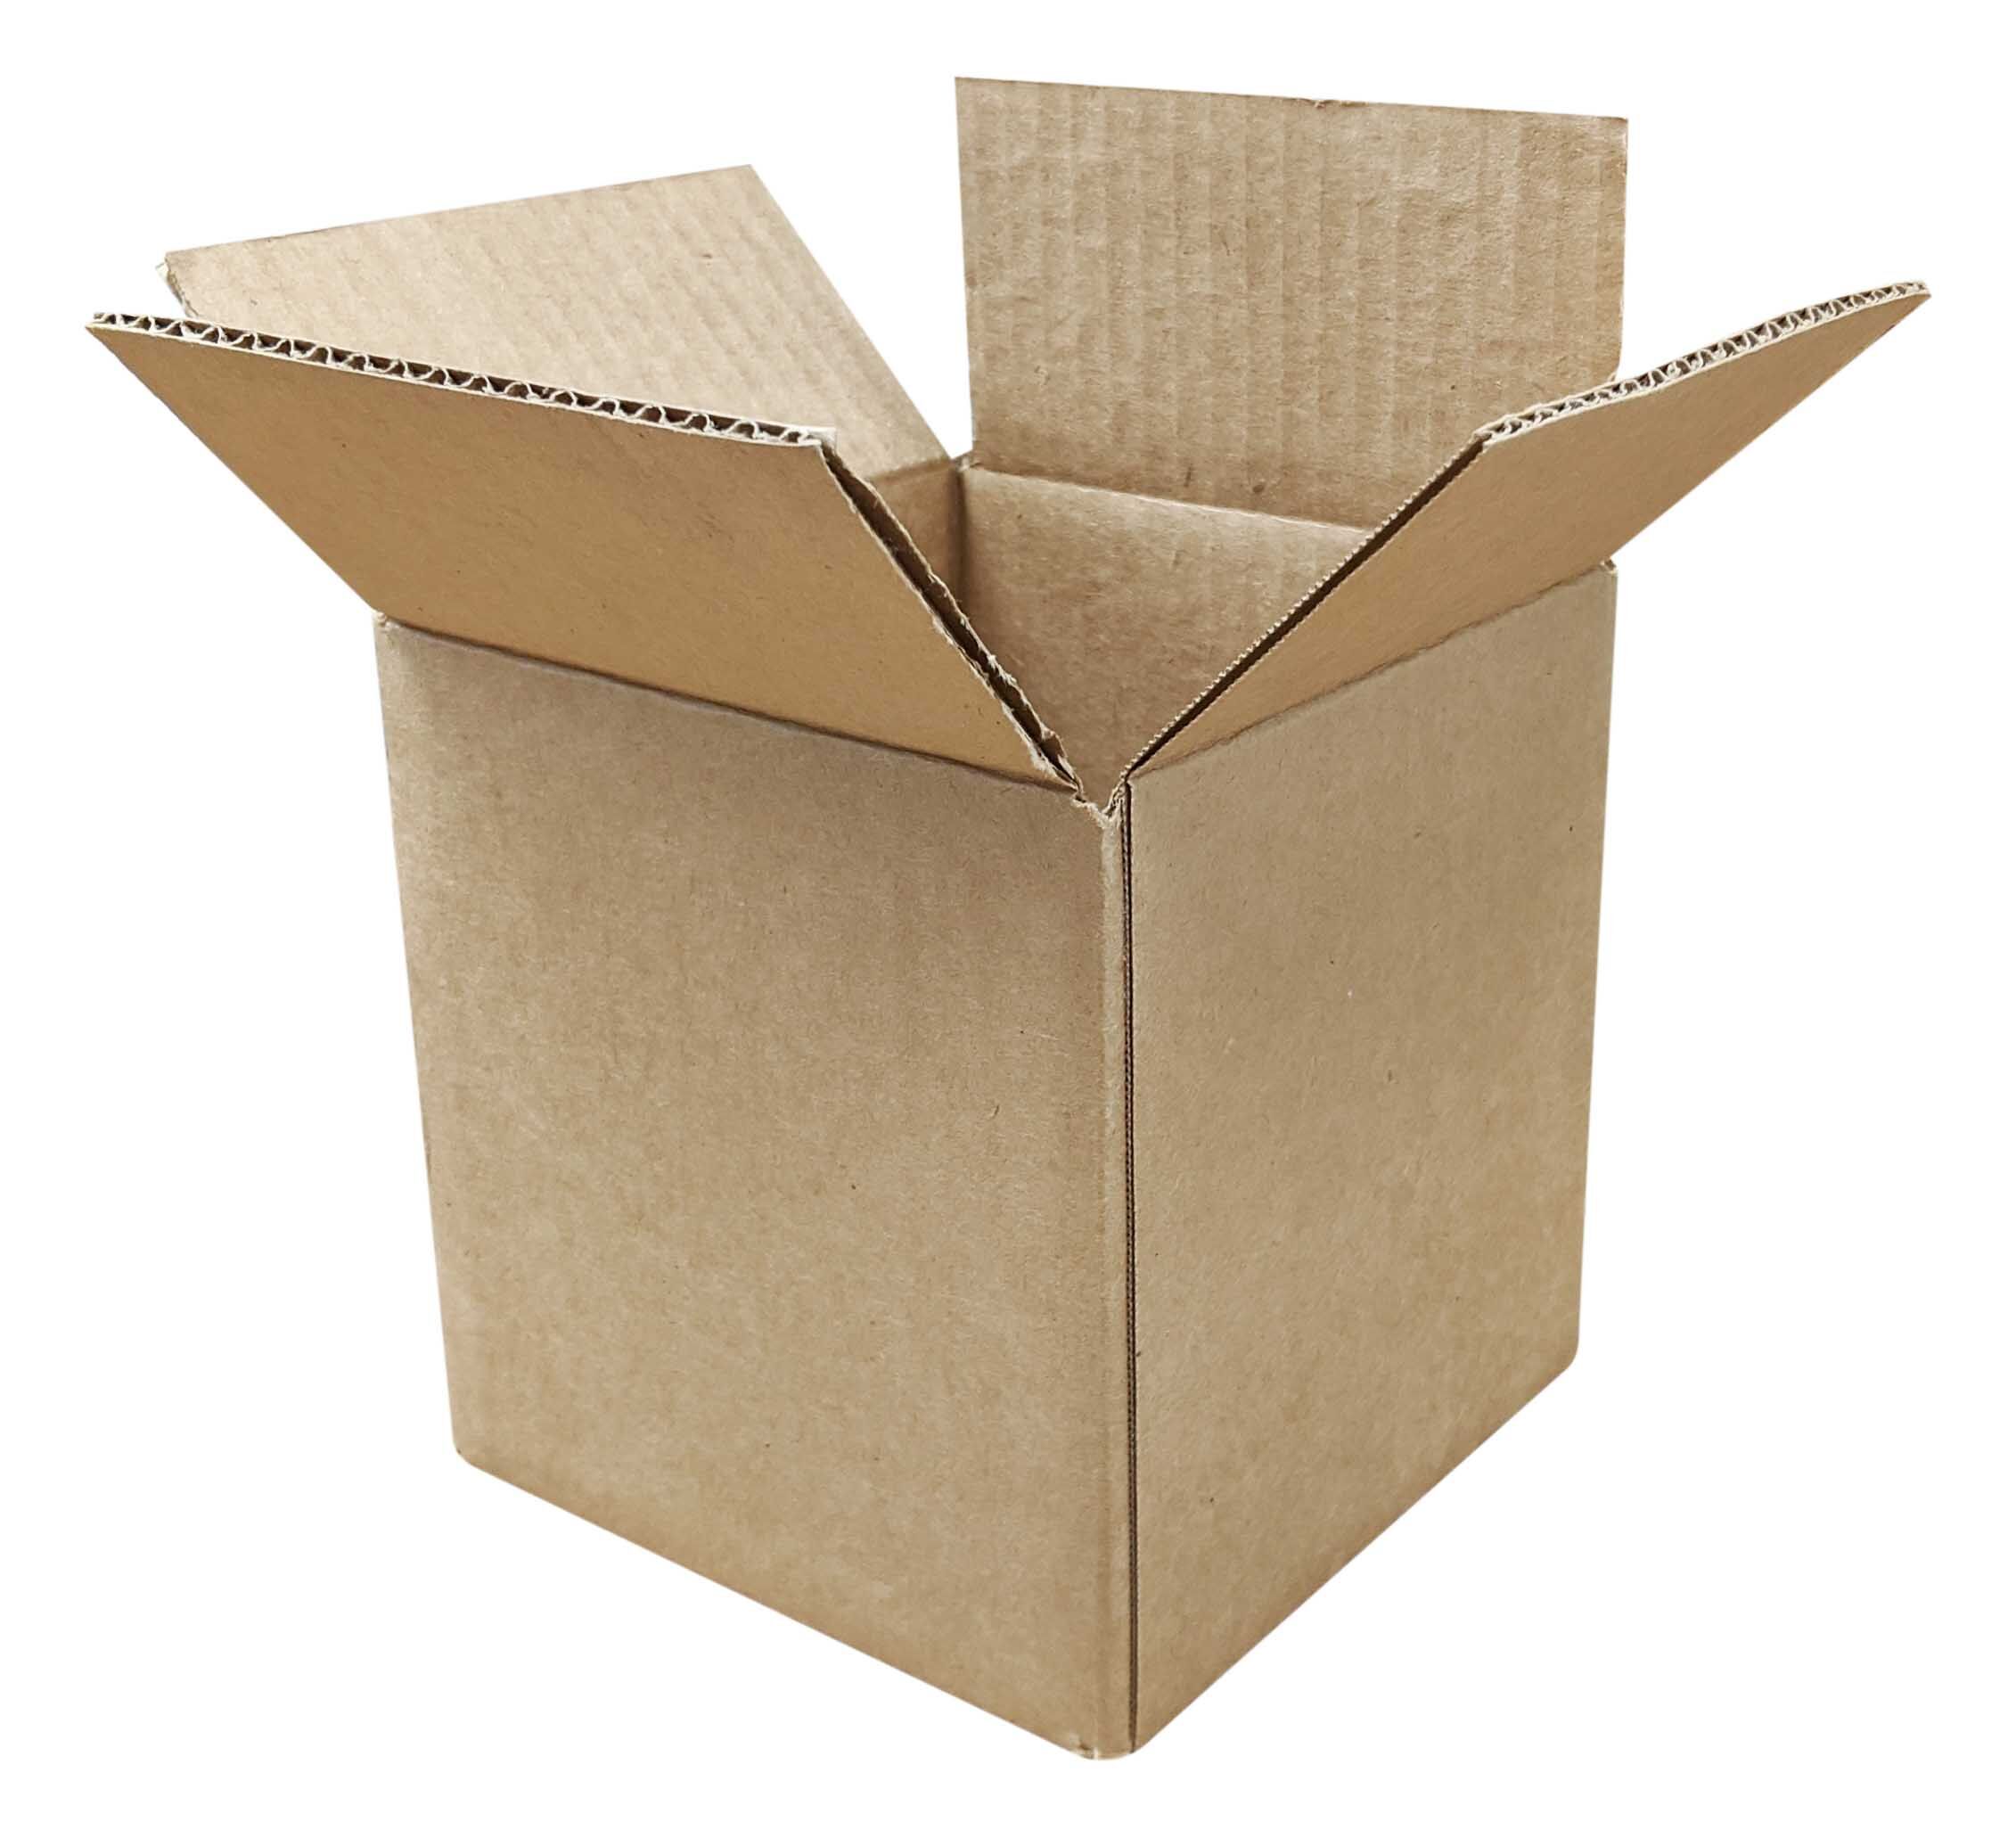 6" x 6" x 6" Corrugated Cardboard Boxes - 25 Boxes/Bundle